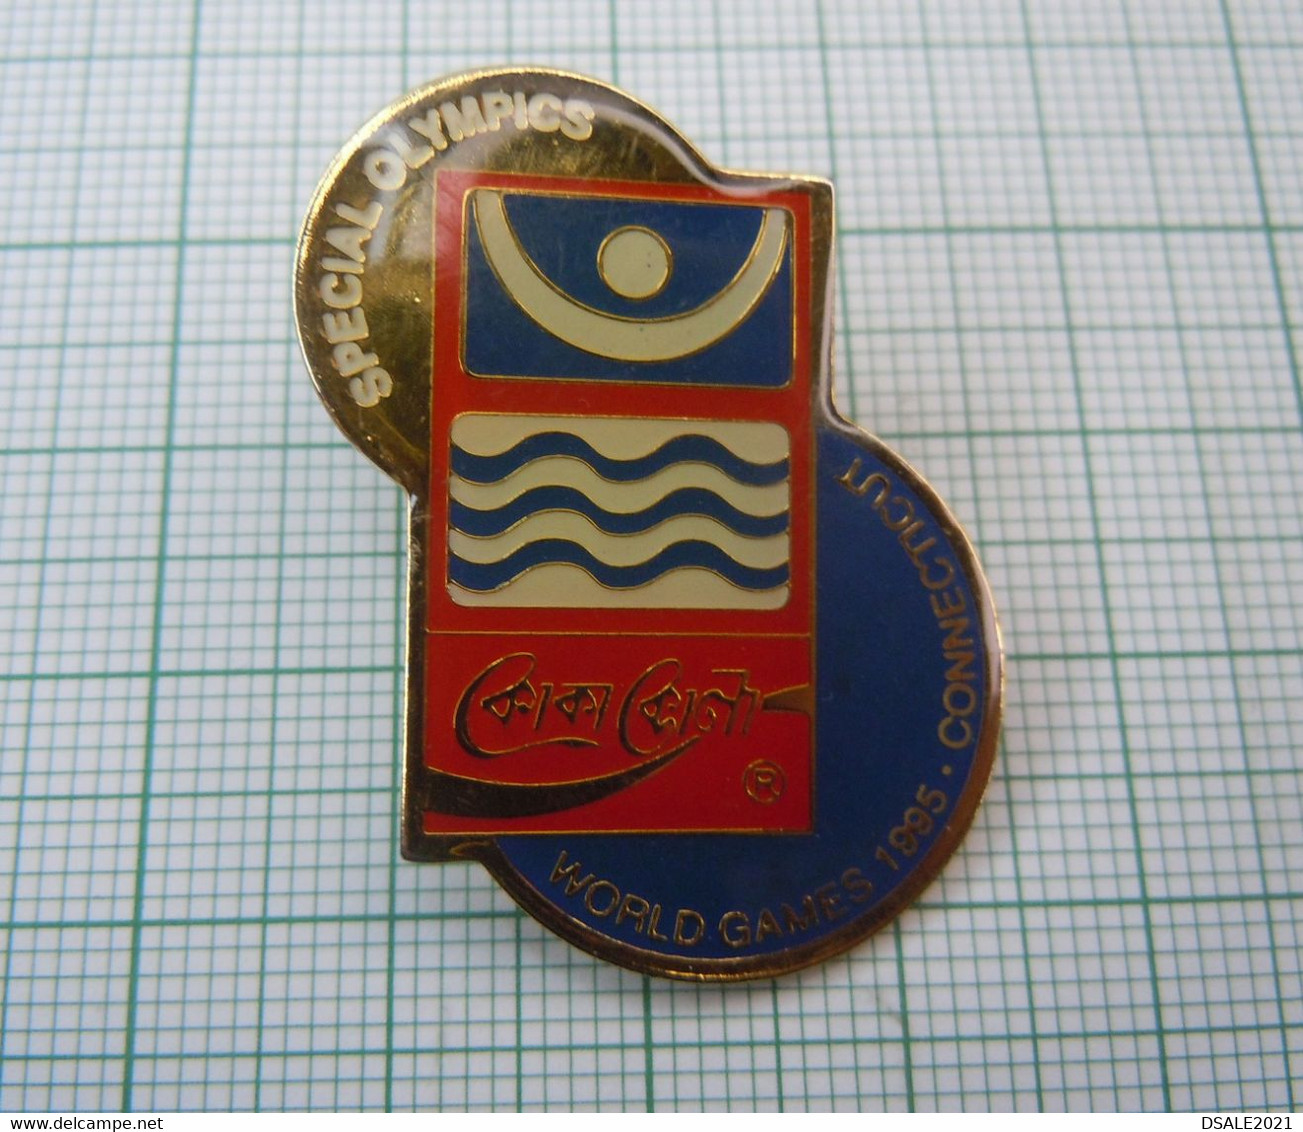 Special Olympics 1995 World Games Swim Swimming Bangladesh COCA-COLA, Coca-Cola Sponsor Lapel Pin Badge (ds786) - Schwimmen